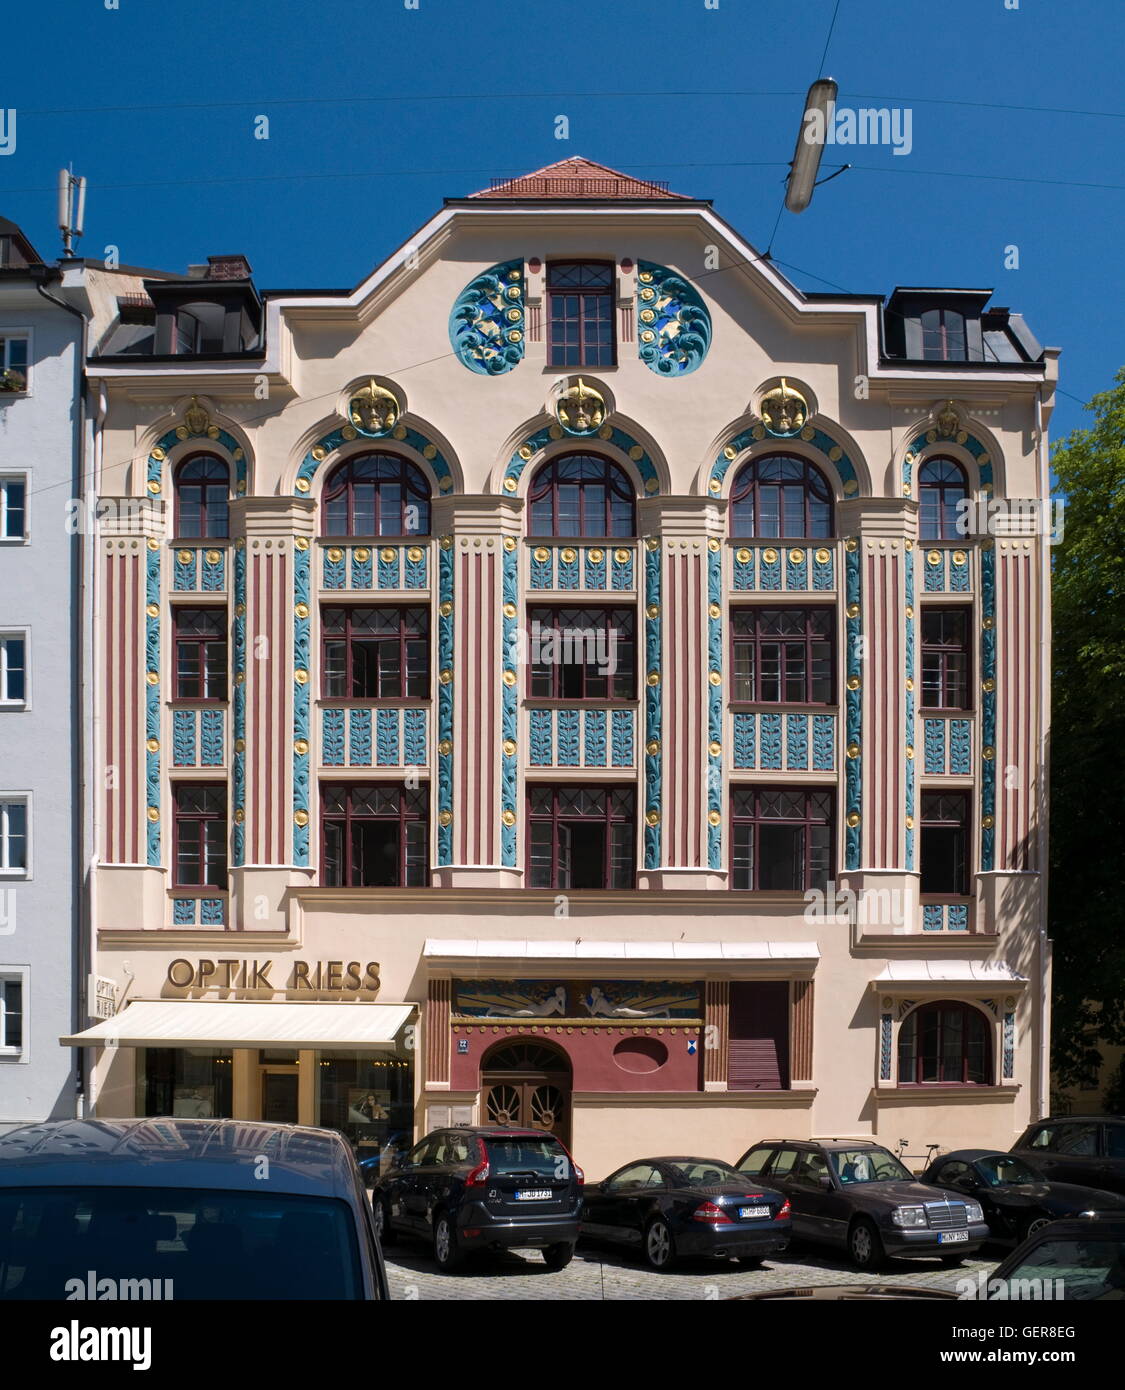 geography / travel, Germany, Bavaria, Munich, Optik Riess House, Schwabing west, Art Nouveau, facade, Stock Photo